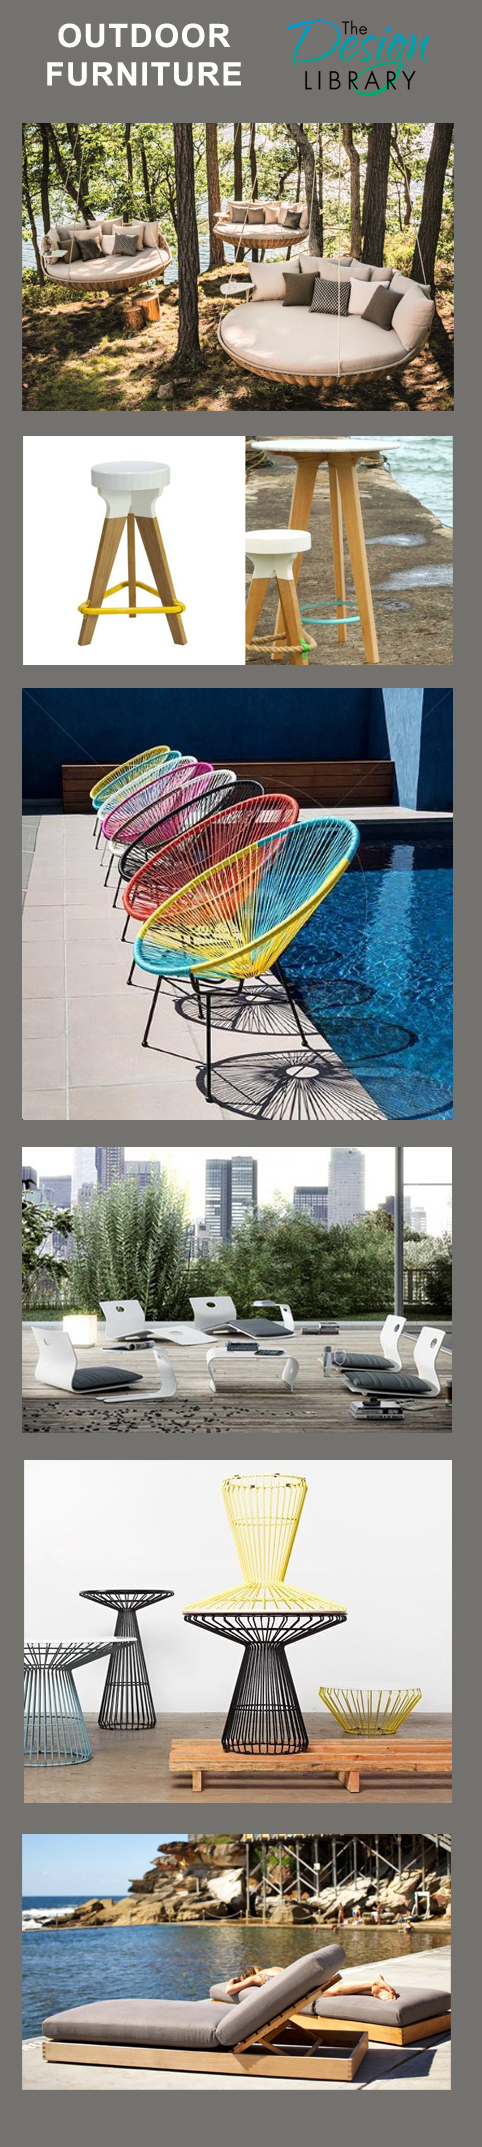 20 Great Pieces of Outdoor Furniture - DesignLibrary.com.au Where Interior Design & Architecture Meet Style